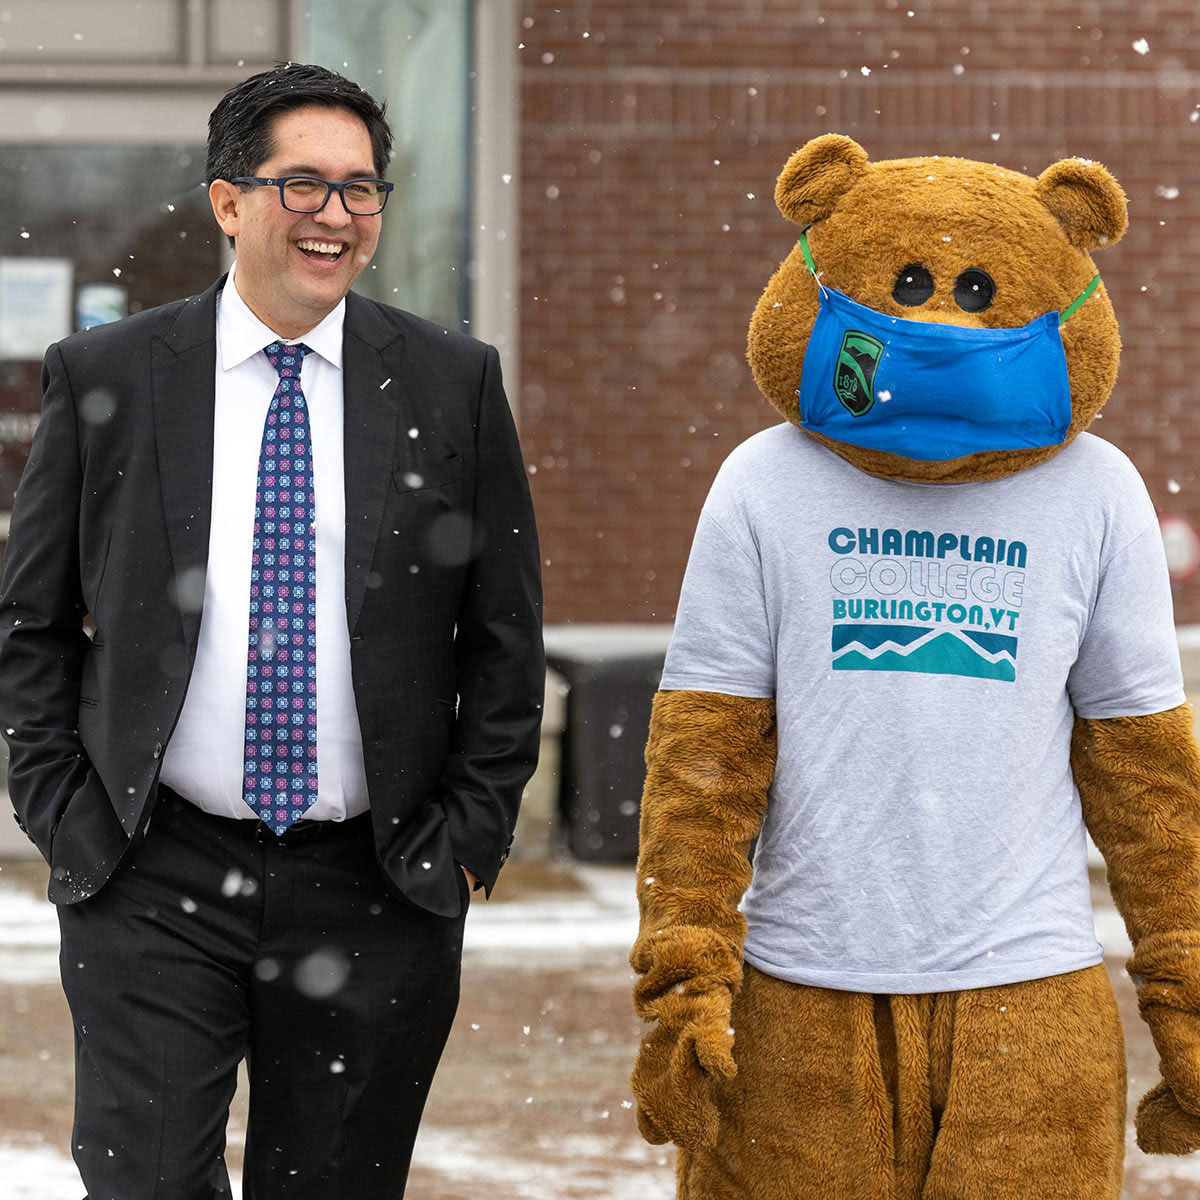 Alex and the Champlain College mascot